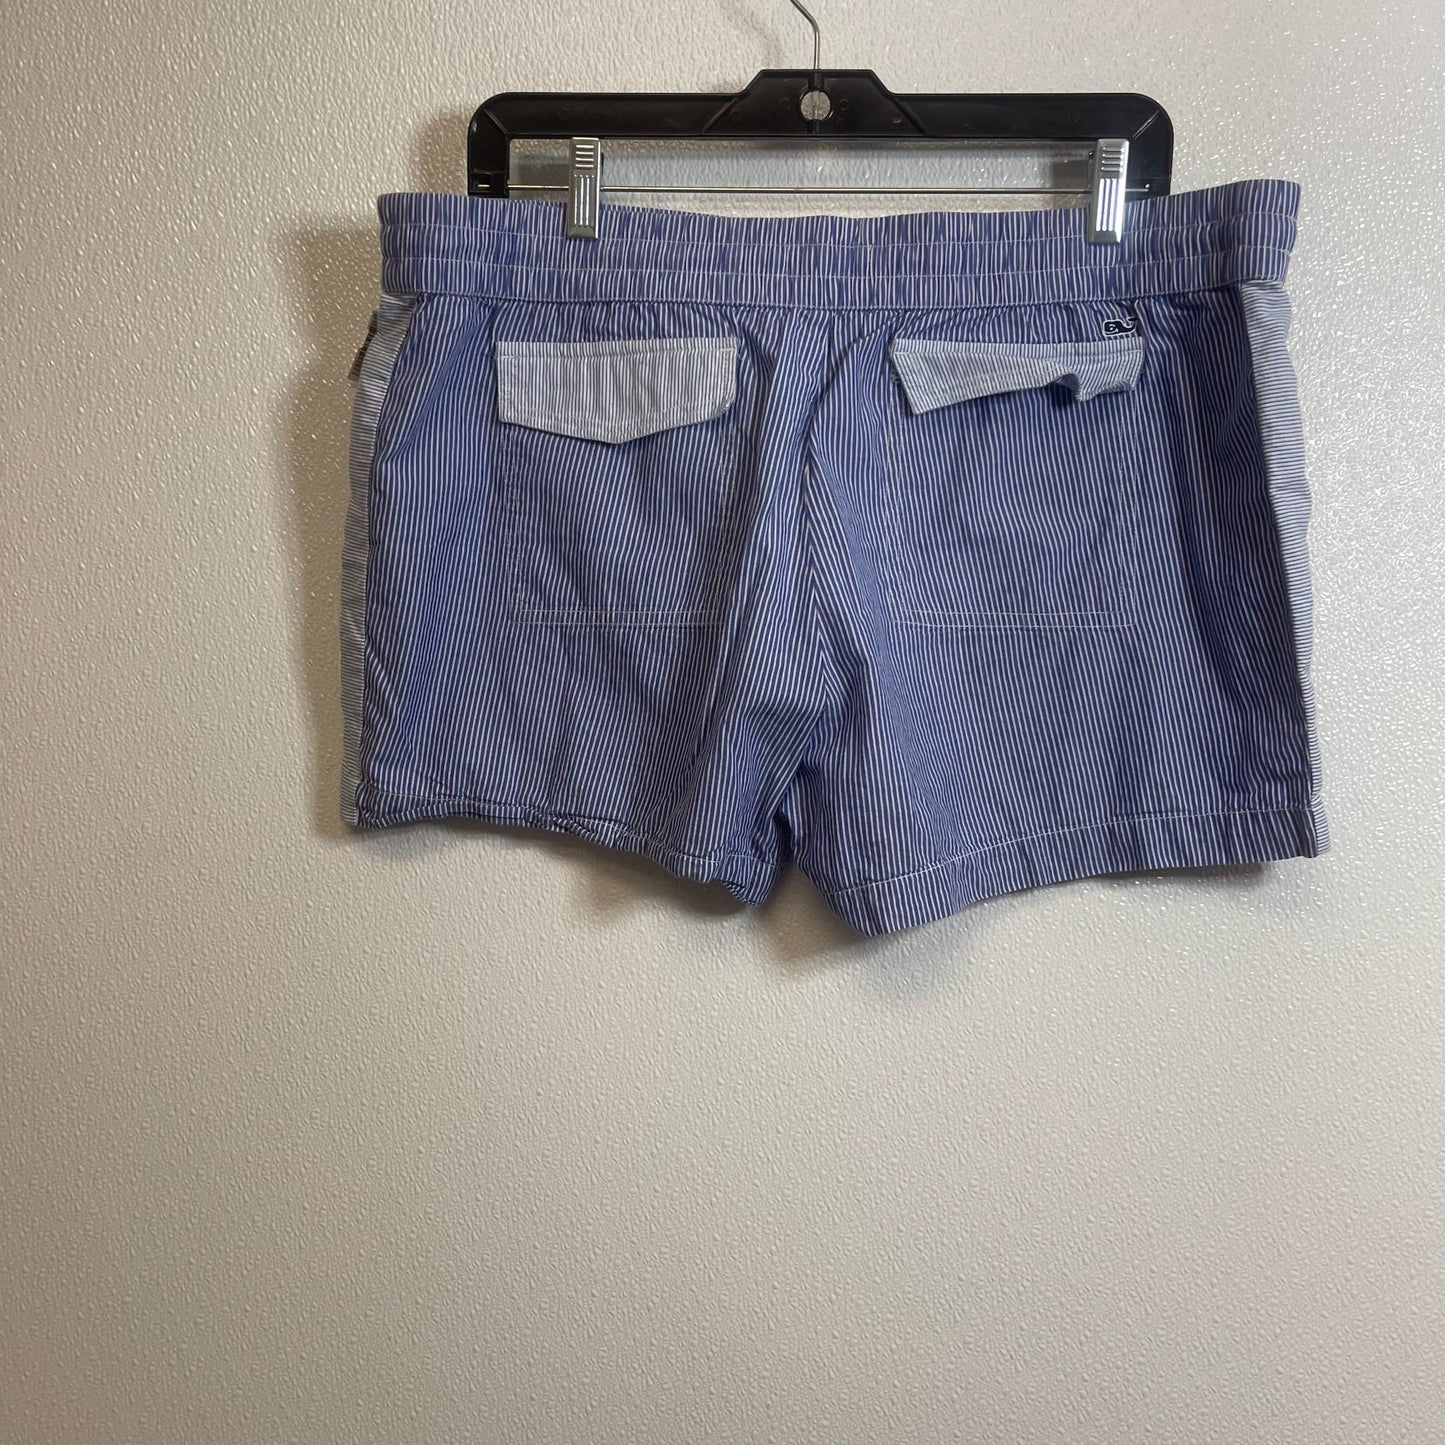 Shorts By Vineyard Vines  Size: L